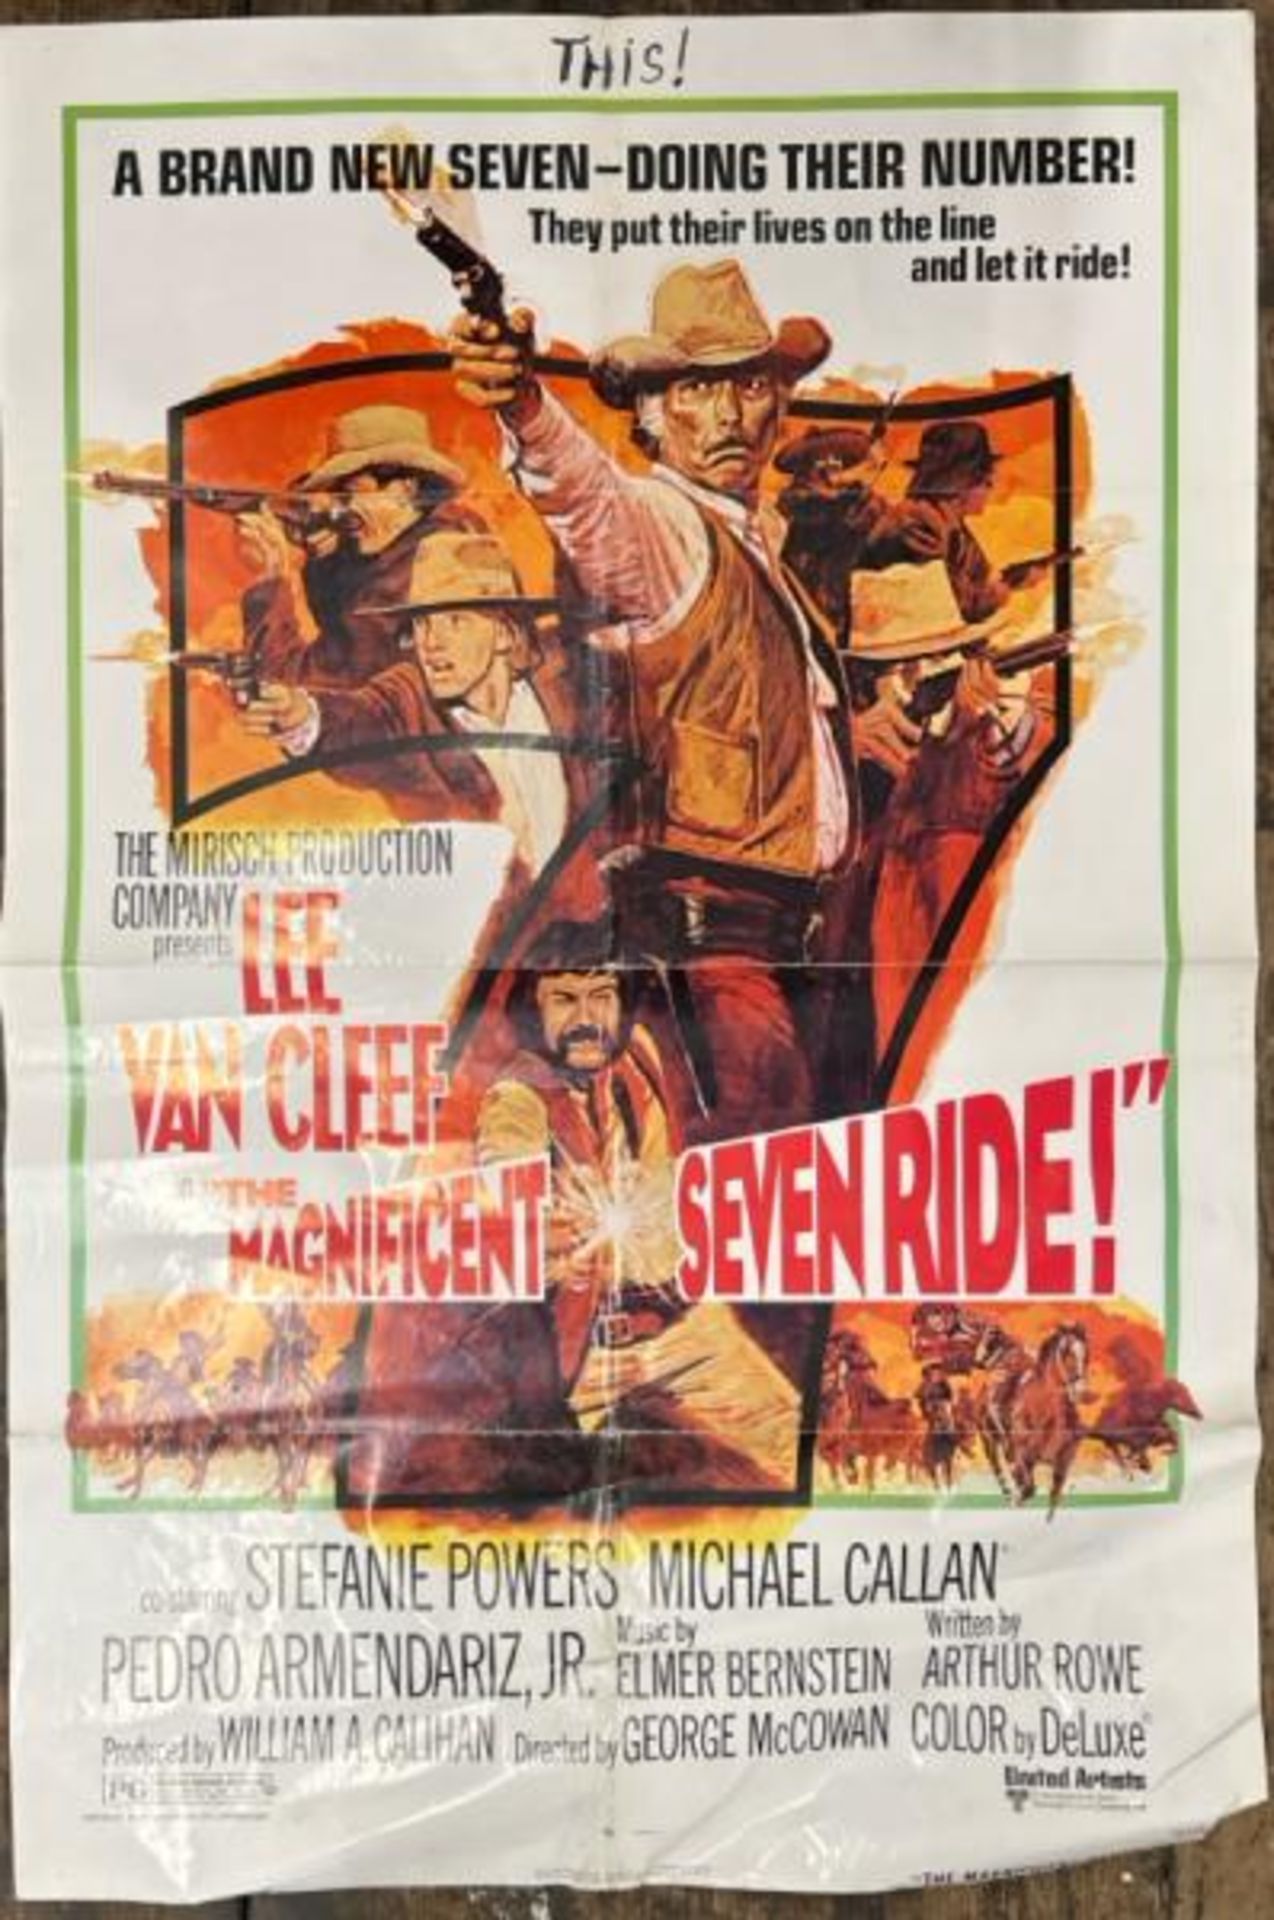 THE MAGNIFICENT SEVEN RIDE!, ORIGINAL FILM POSTER, 72/29*?, 69CM W X 103.5CM H